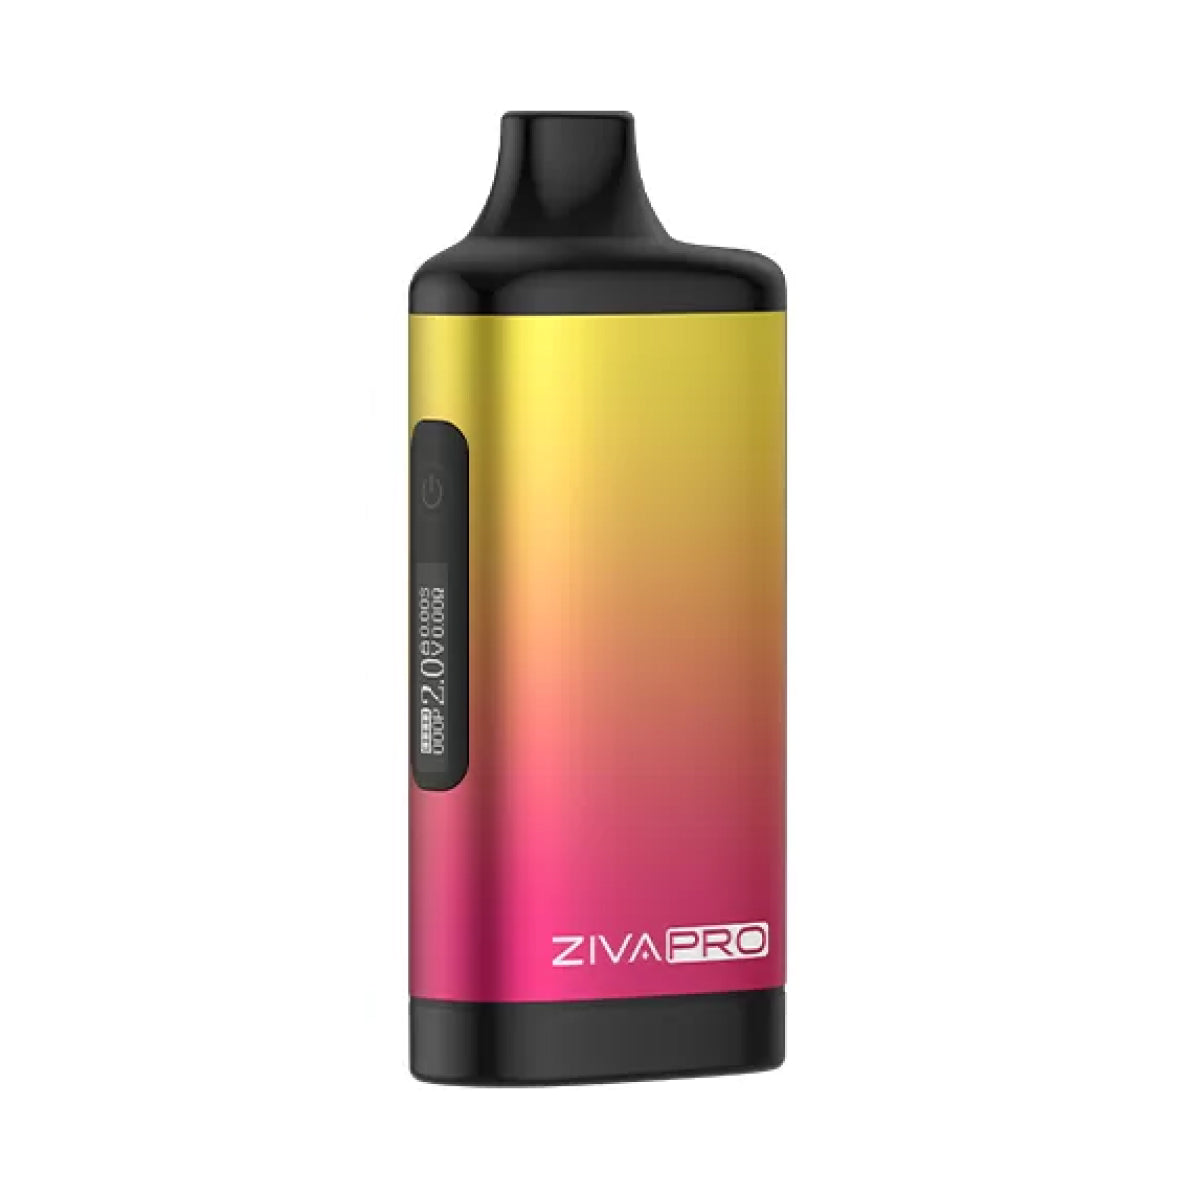 Yocan Ziva Pro Smart Vaporizer Mod - yellow pink gradient